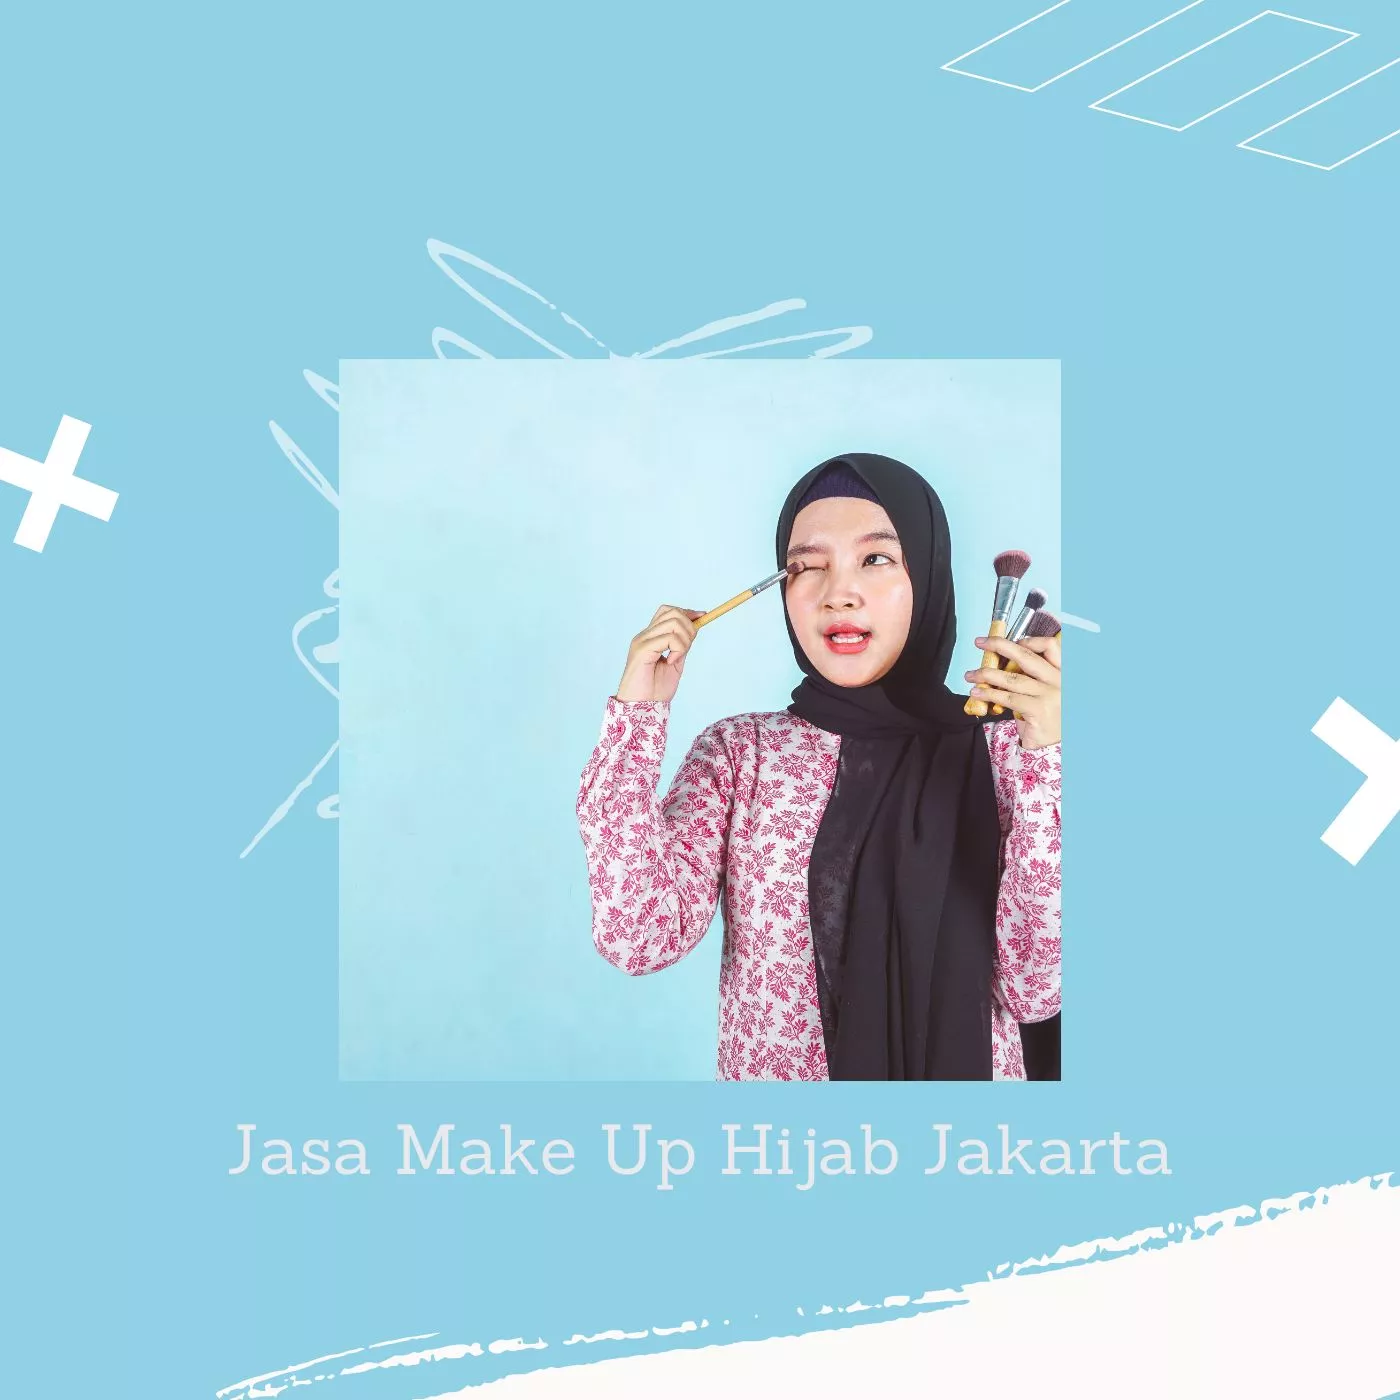 Jasa Make Up Hijab Jakarta 